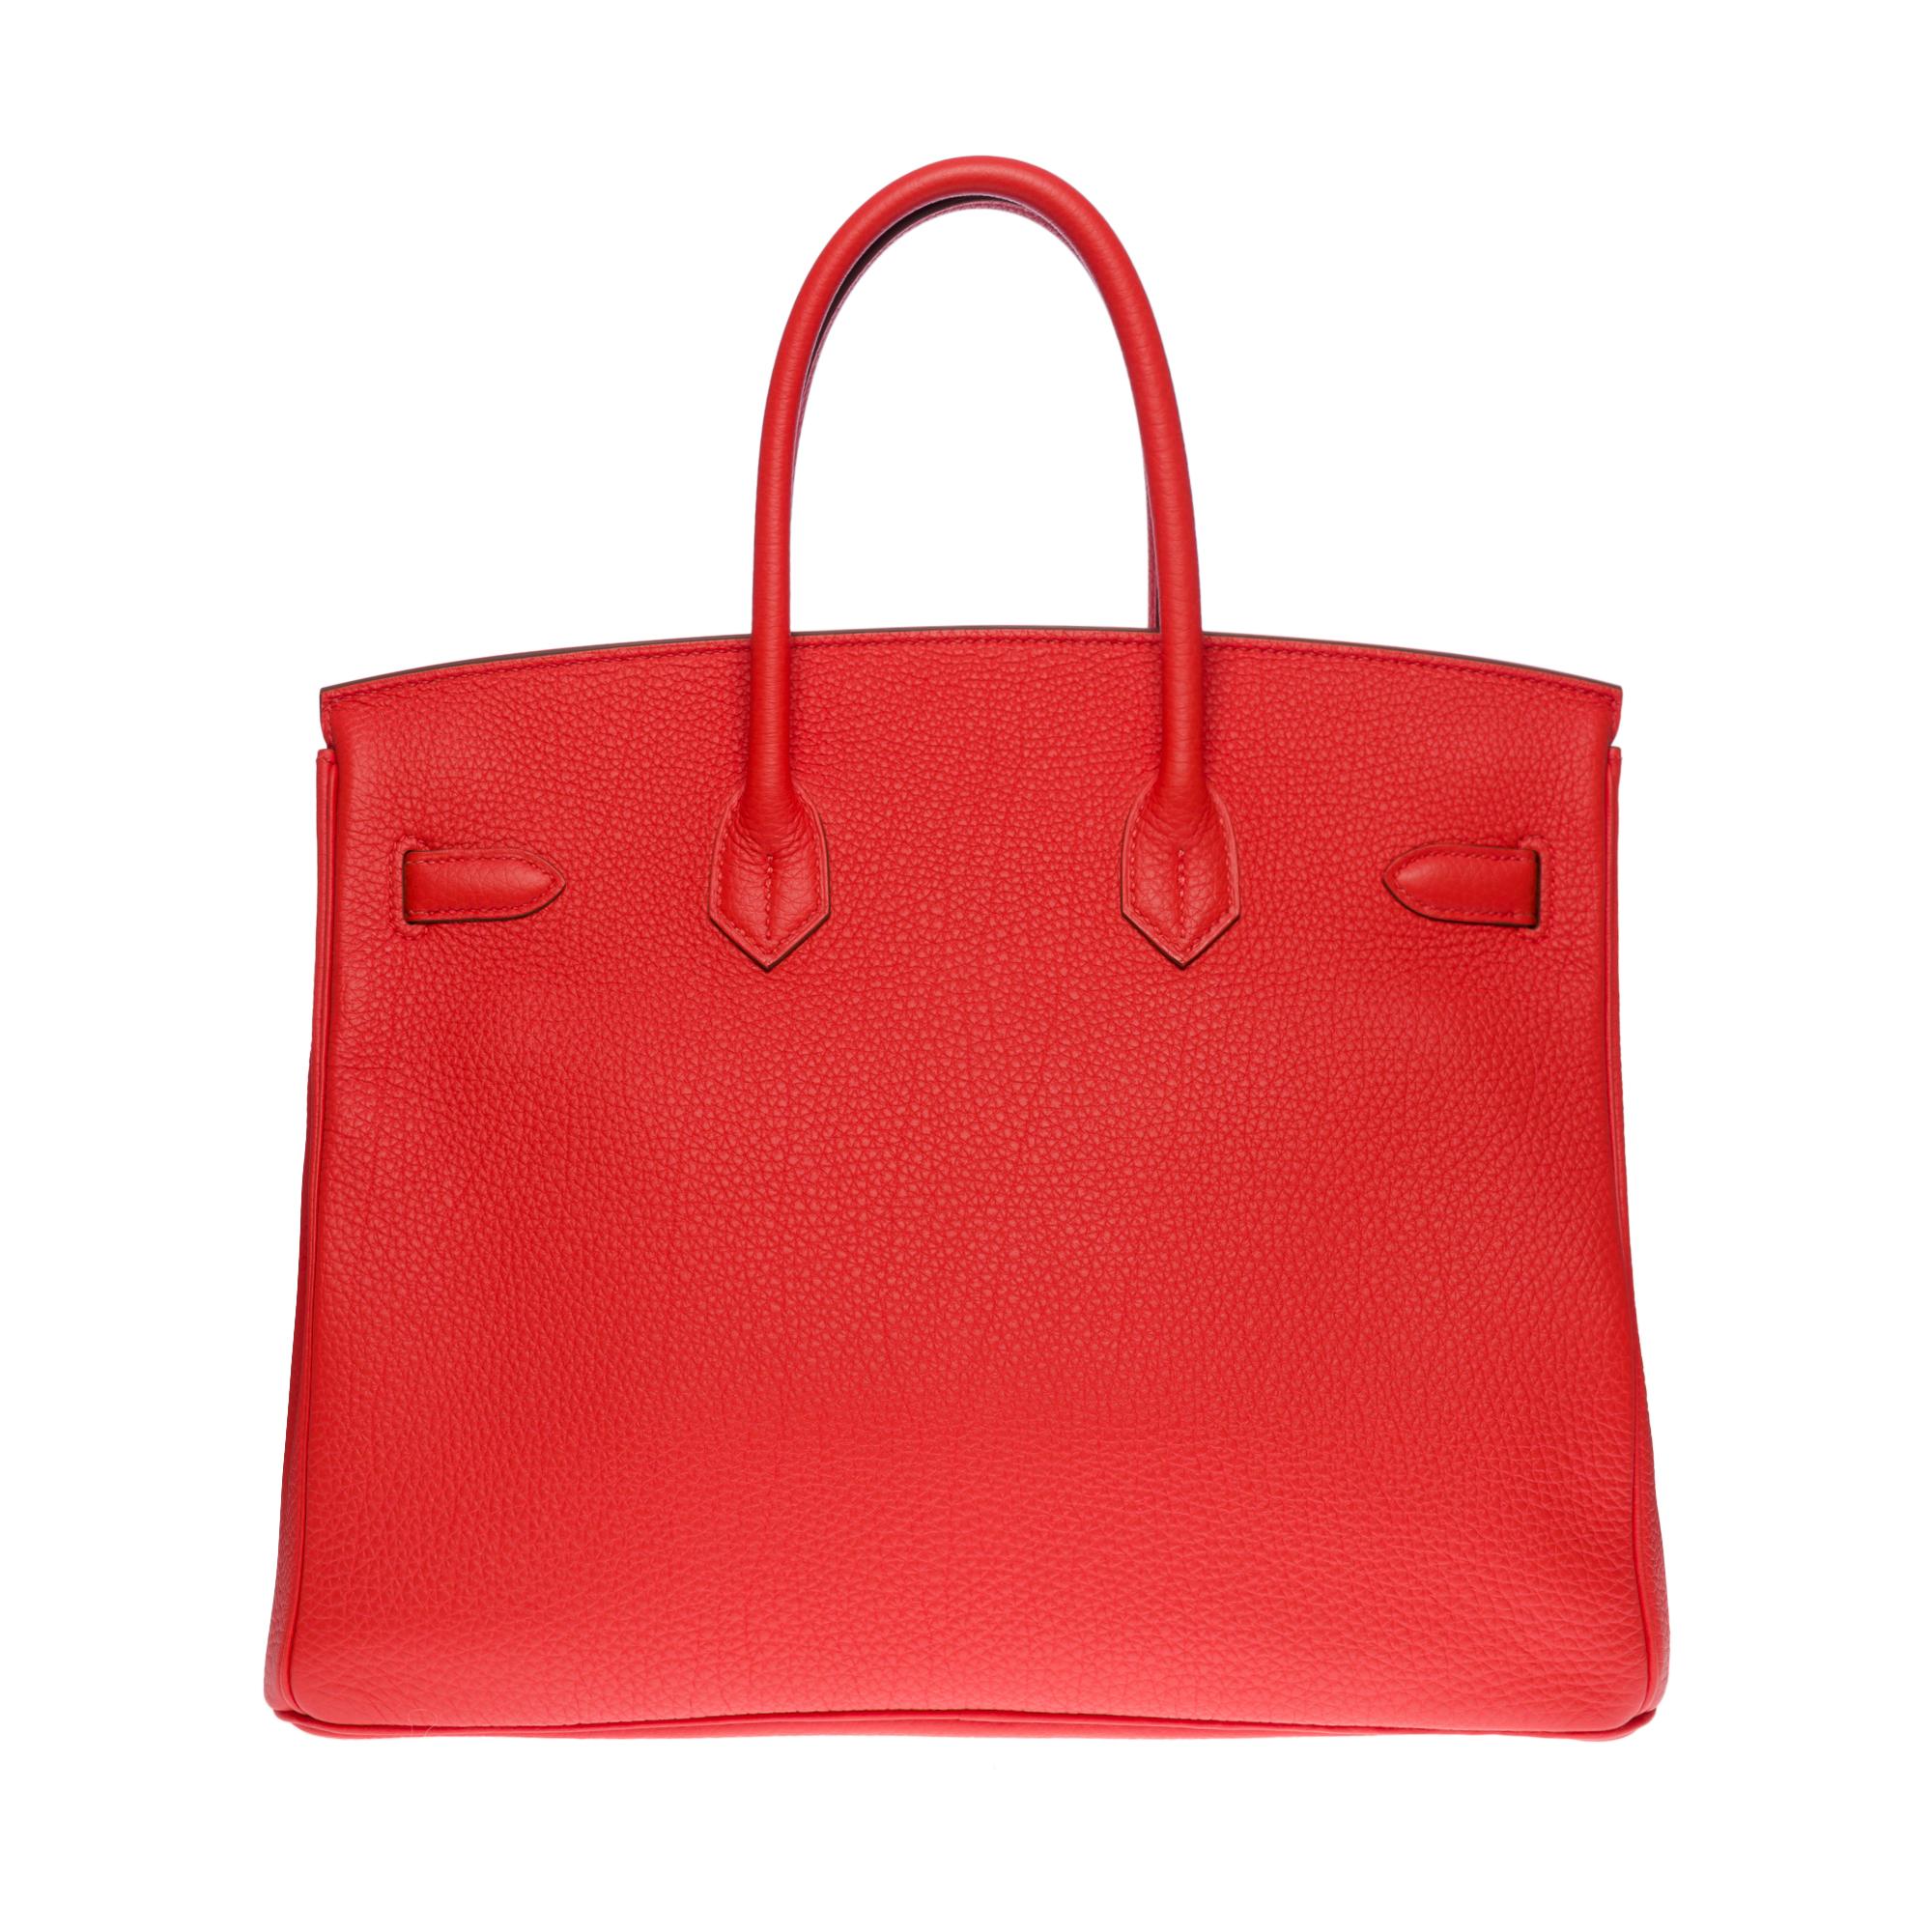 Almost New Hermès Birkin 35 handbag in Orange Poppy Togo leather, SHW (Rot) im Angebot